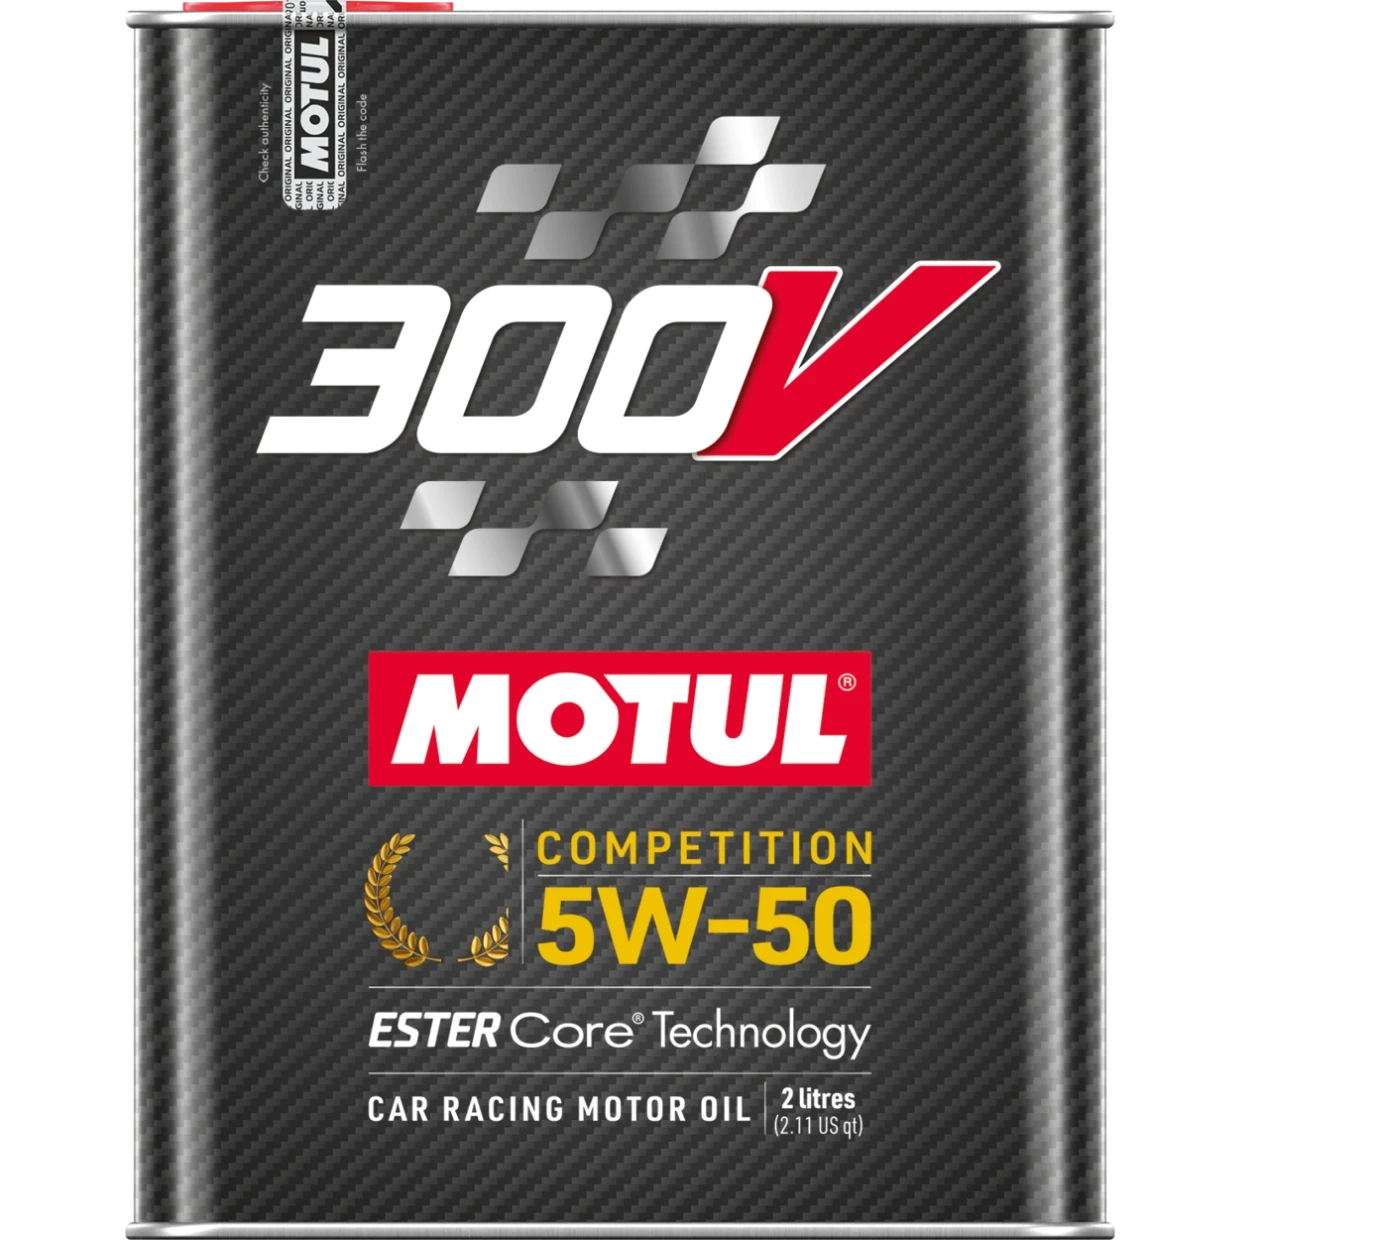 MOTUL 300V COMPETITION 5W-50